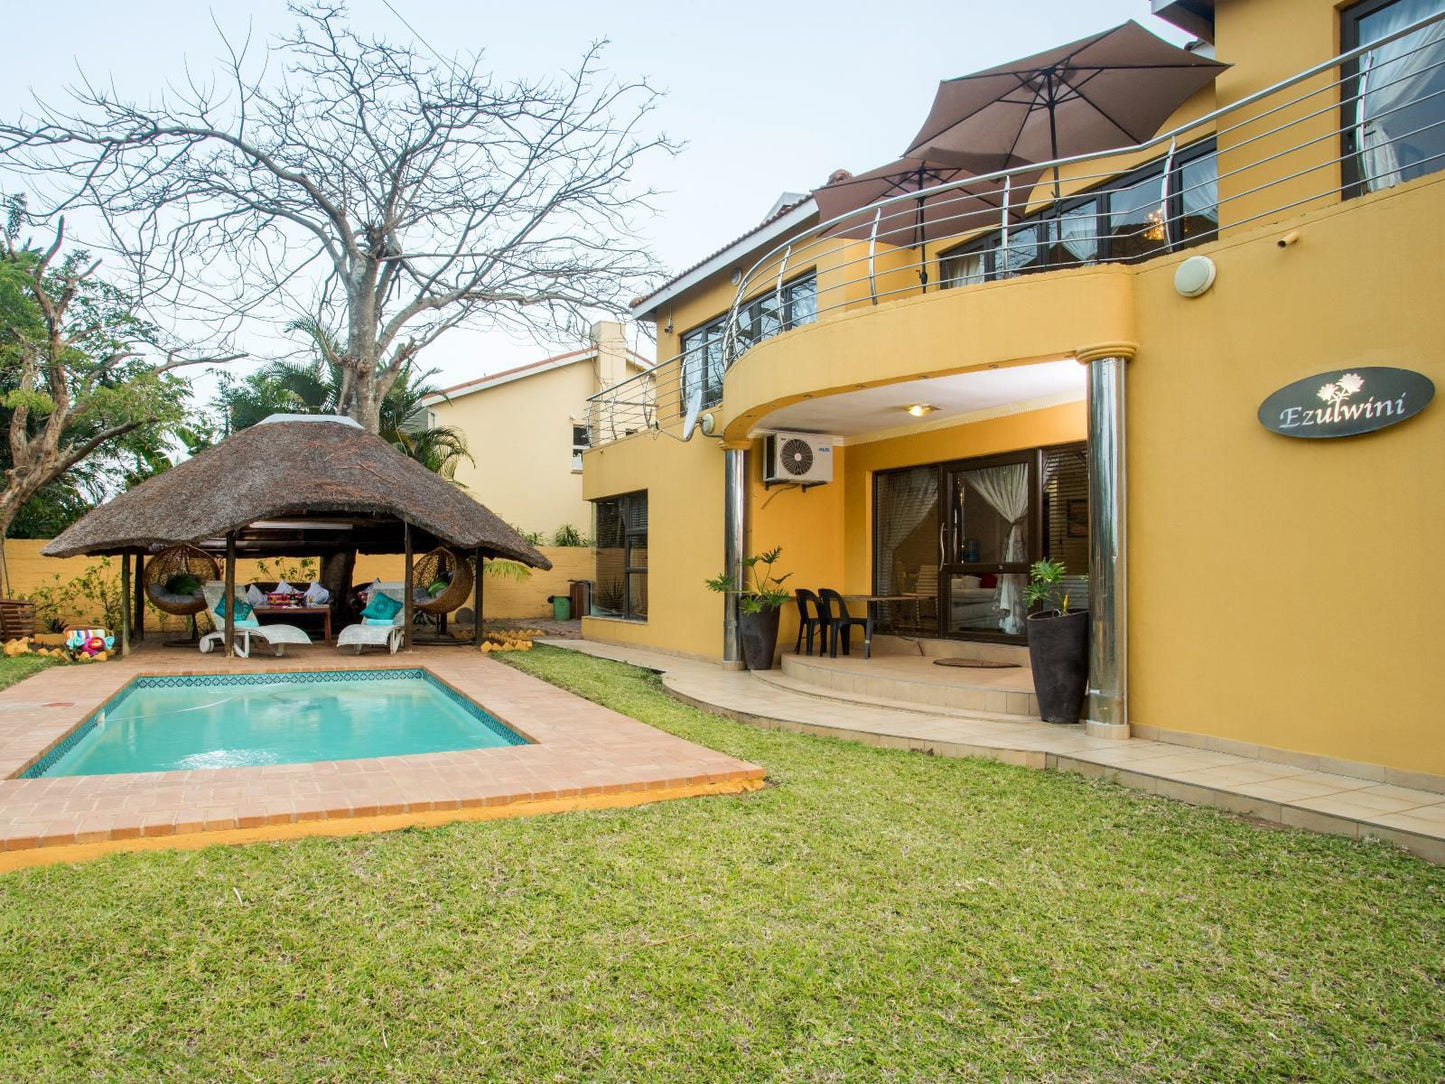 Ezulwini Guest House Ballito Kwazulu Natal South Africa House, Building, Architecture, Palm Tree, Plant, Nature, Wood, Swimming Pool